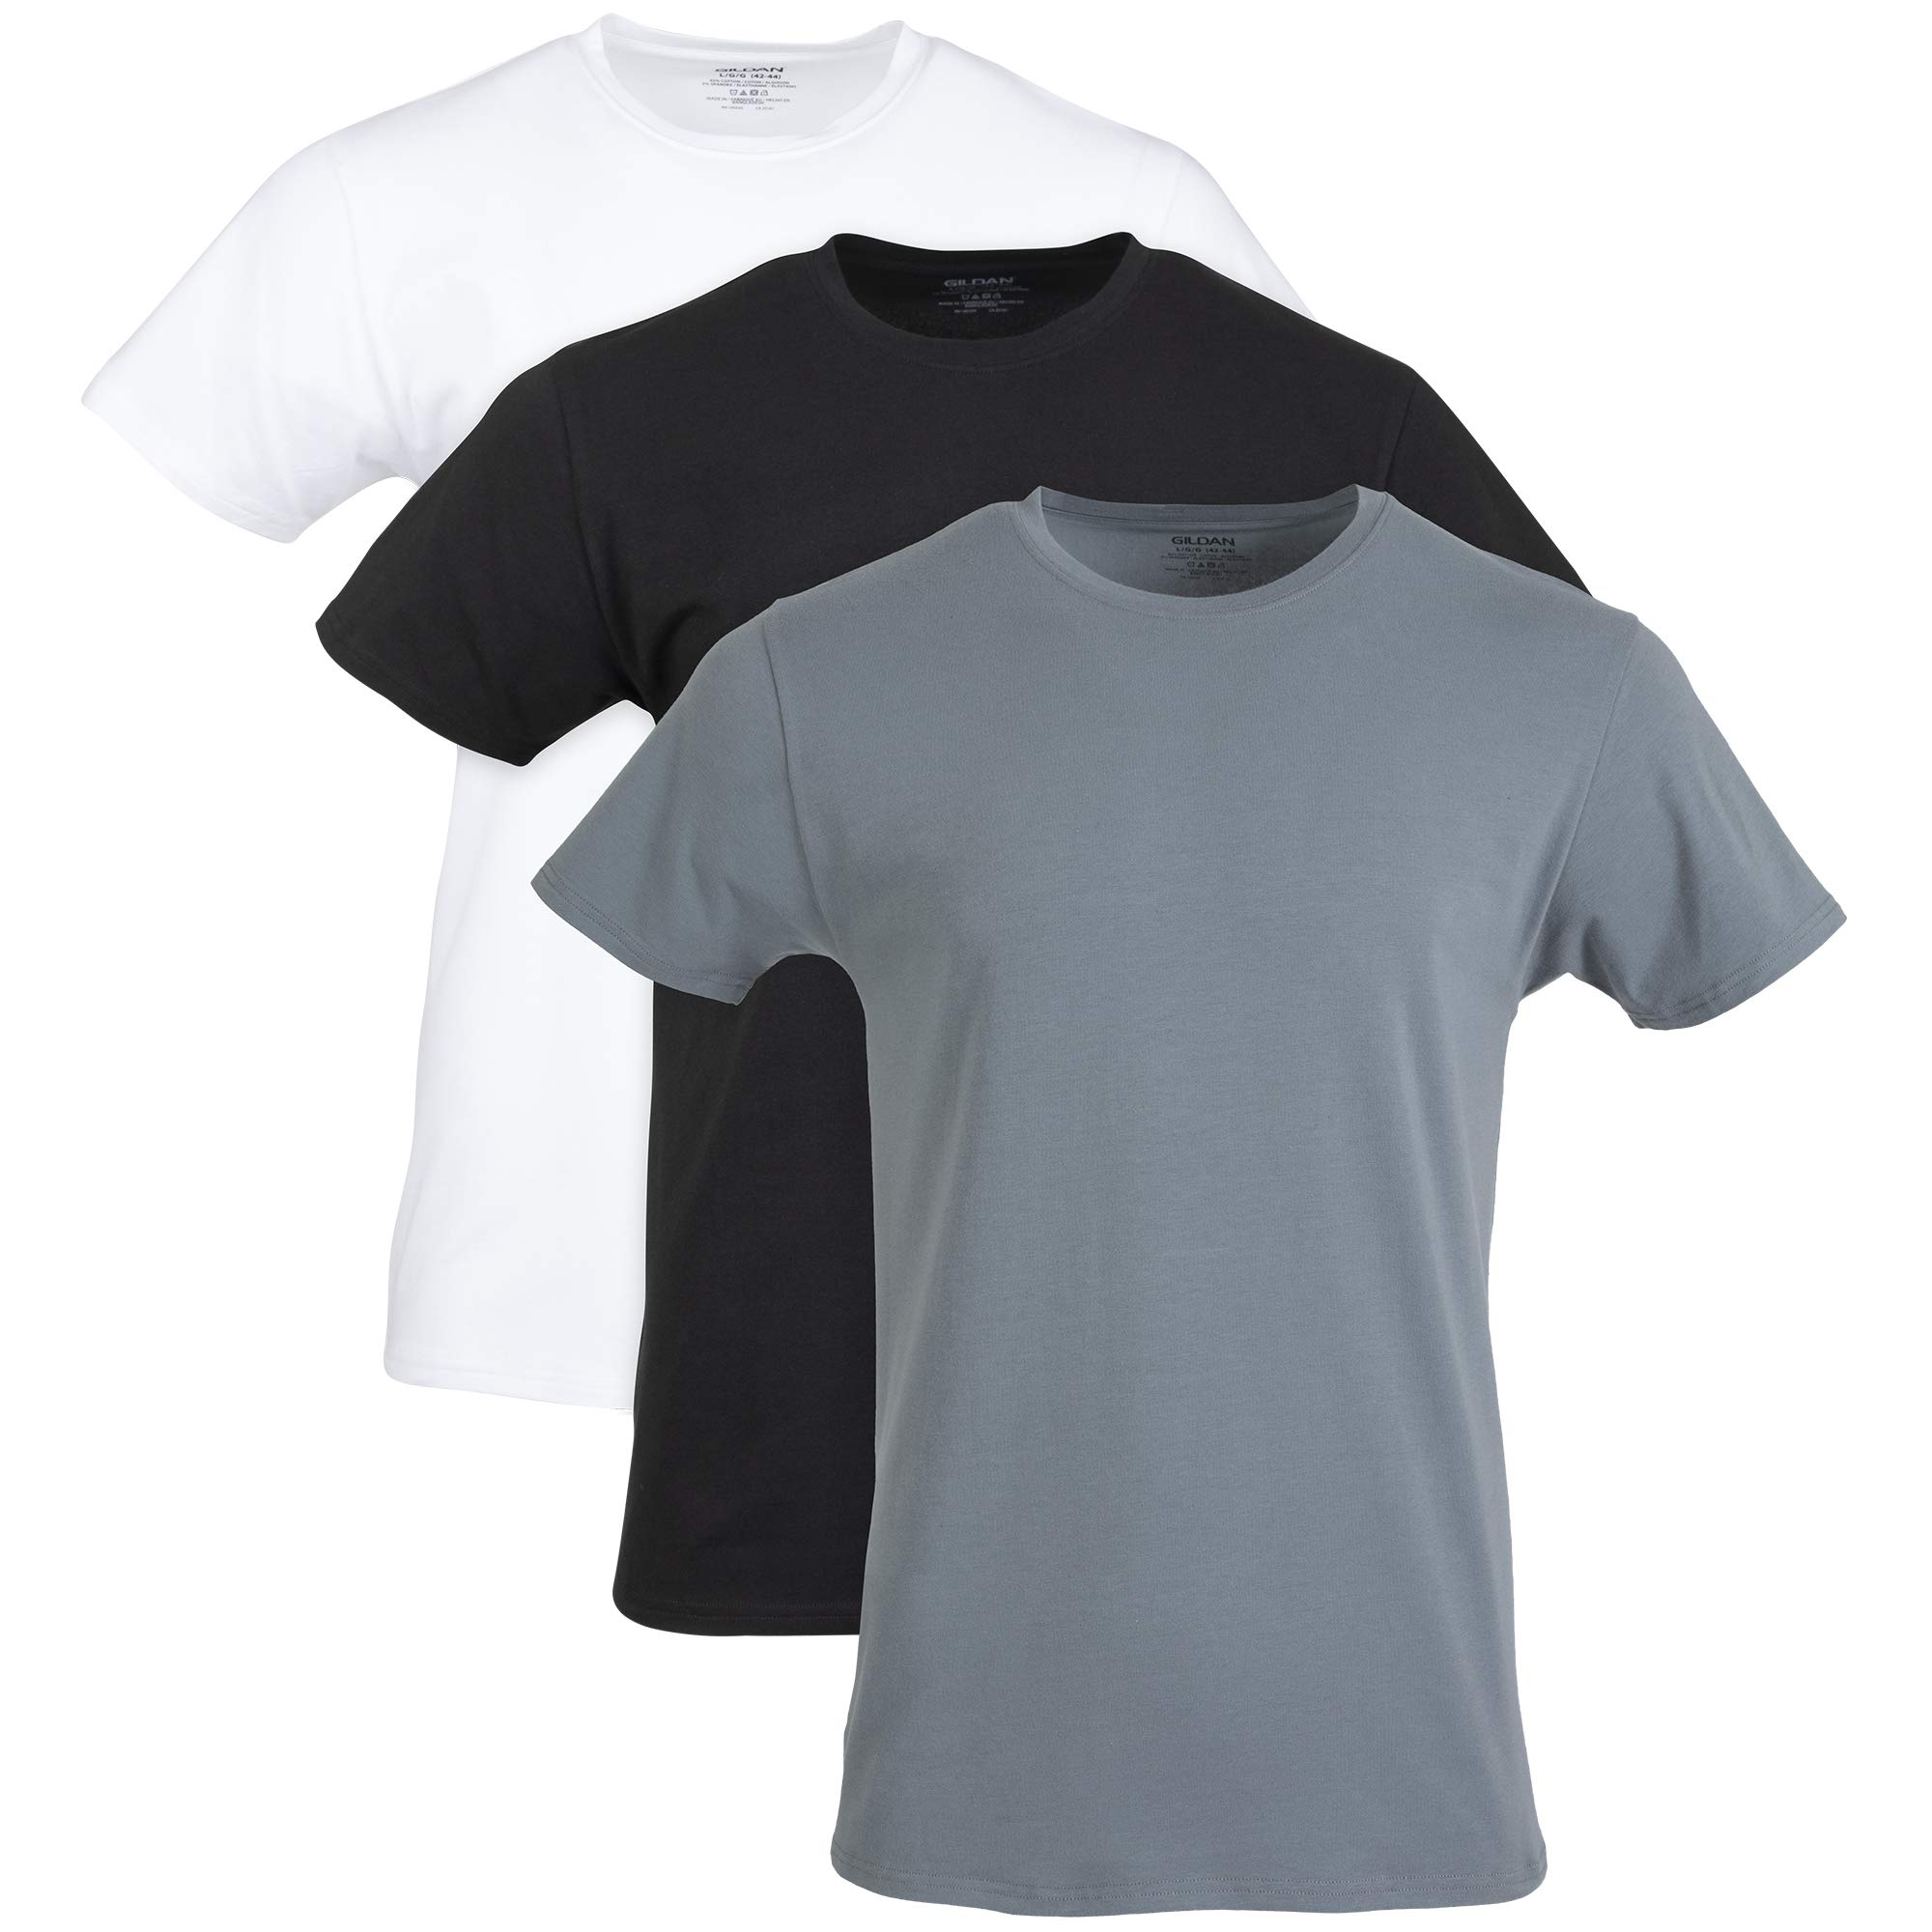 Gildan Men's Cotton Stretch T-Shirts, Multipack